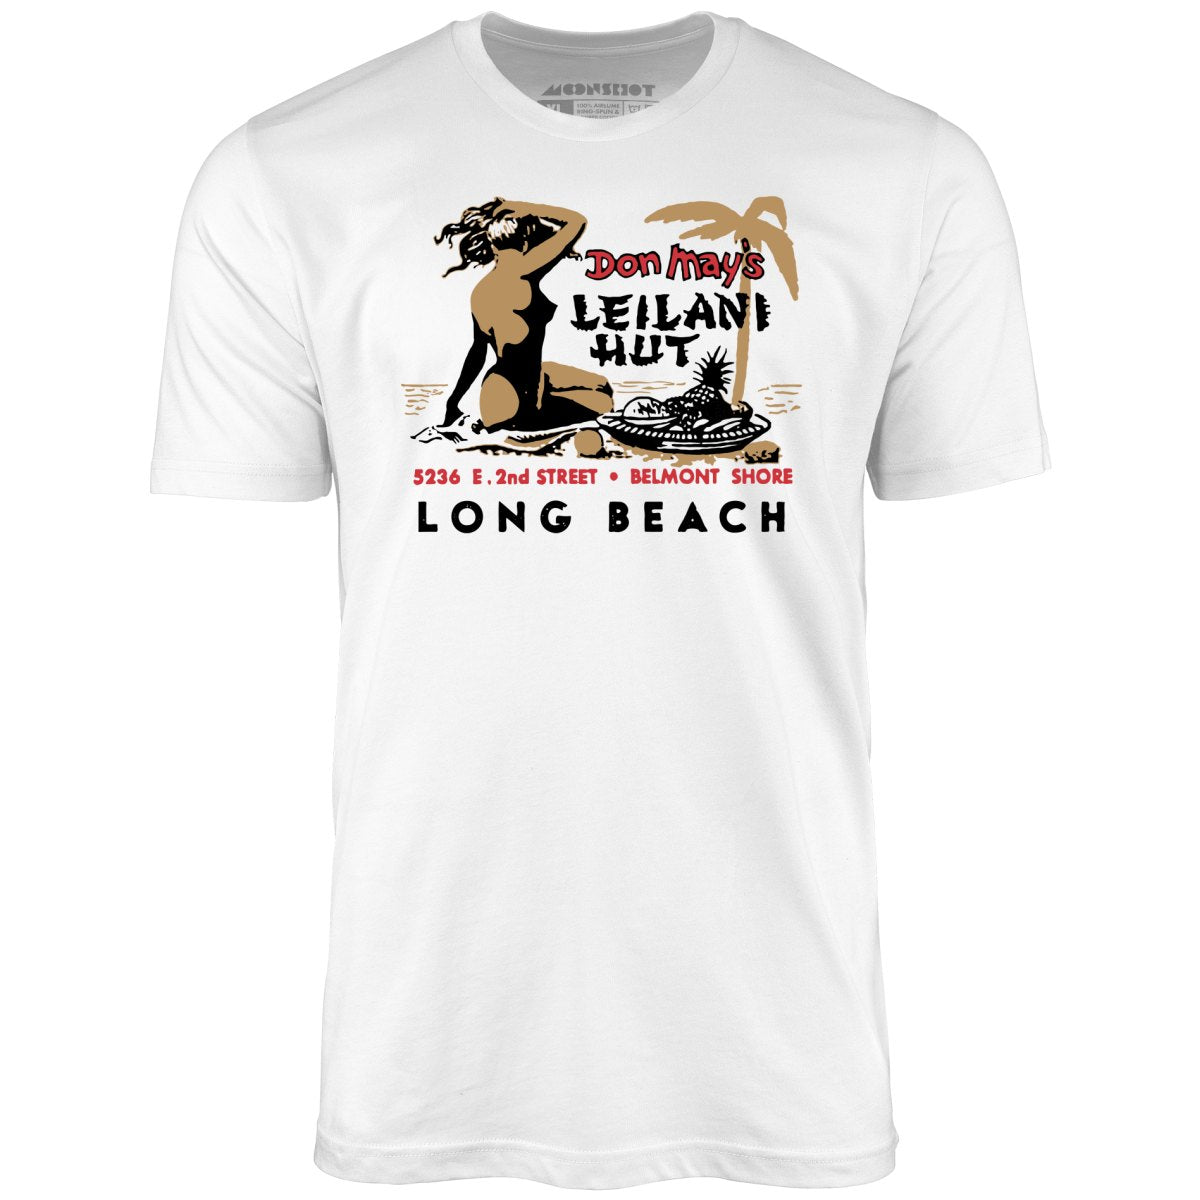 Don May's Leilani Hut - Belmont Shore, CA - Vintage Tiki Bar - Unisex T-Shirt